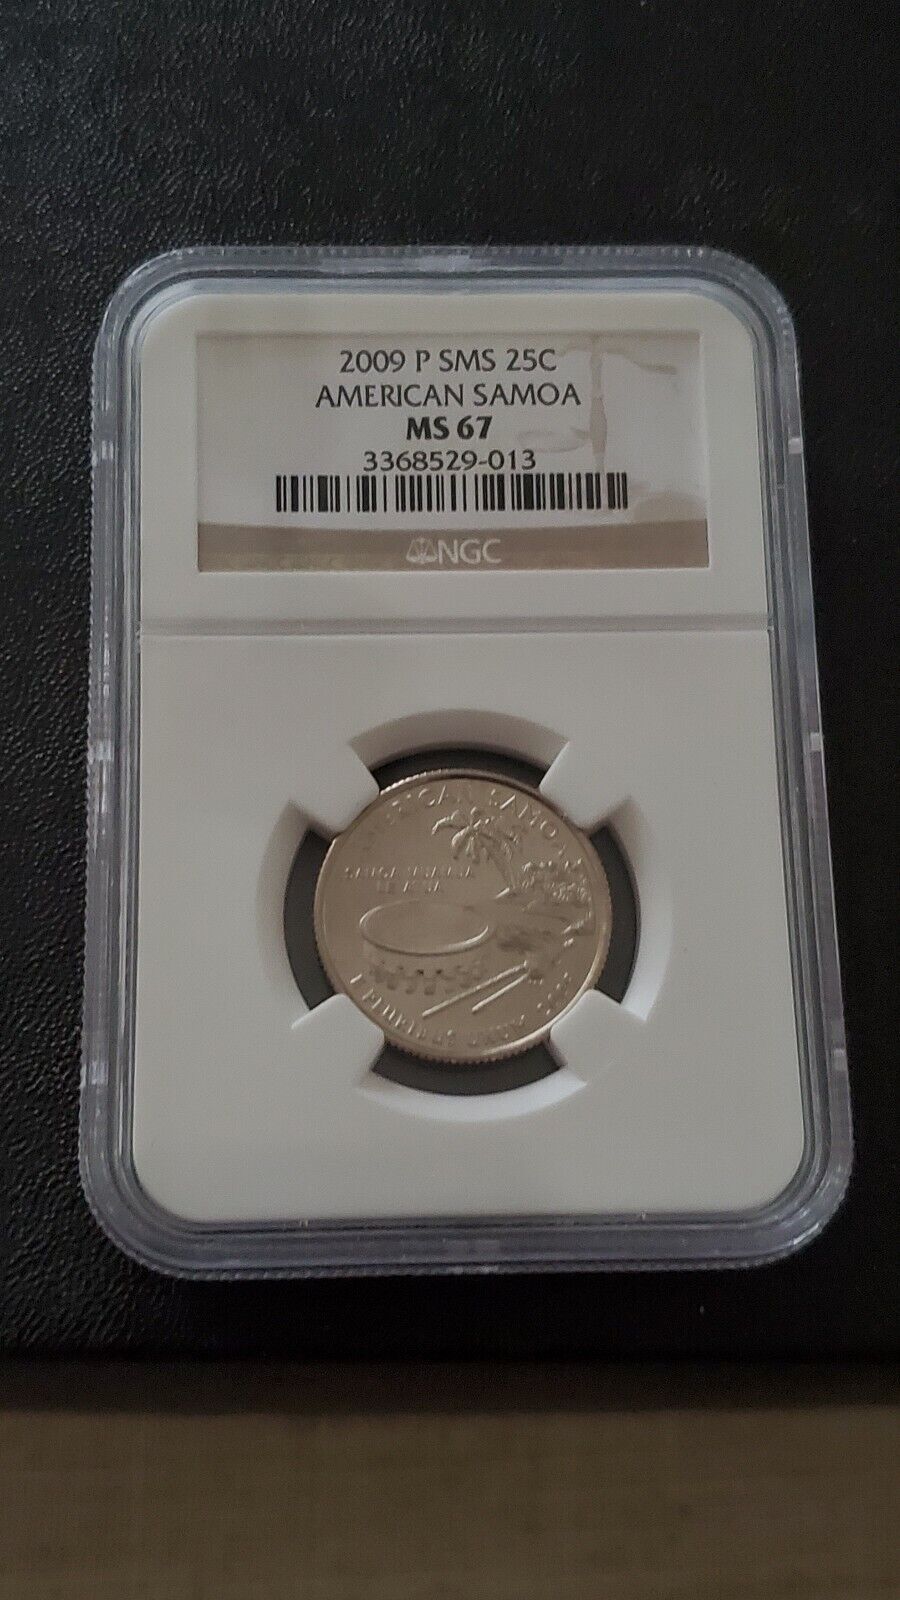 2009 P SMS 25c American Samoa Quarter Coin MS67 NGC Gem Certified BU Unc